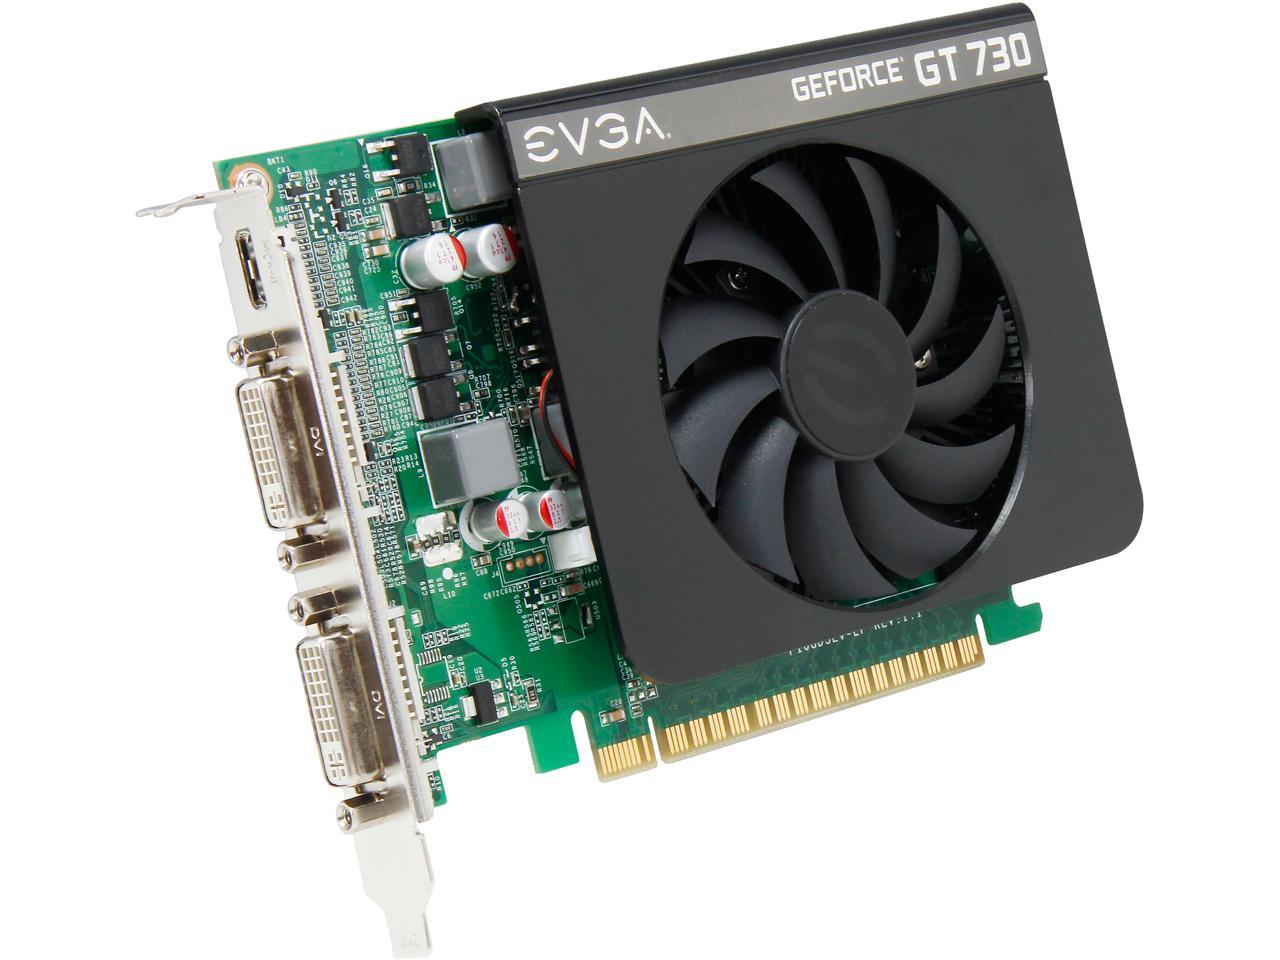 EVGA GeForce GT 730 DirectX 12 01G-P3-2731-KR 1GB 128-Bit DDR3 PCI Express 2.0 Video Card